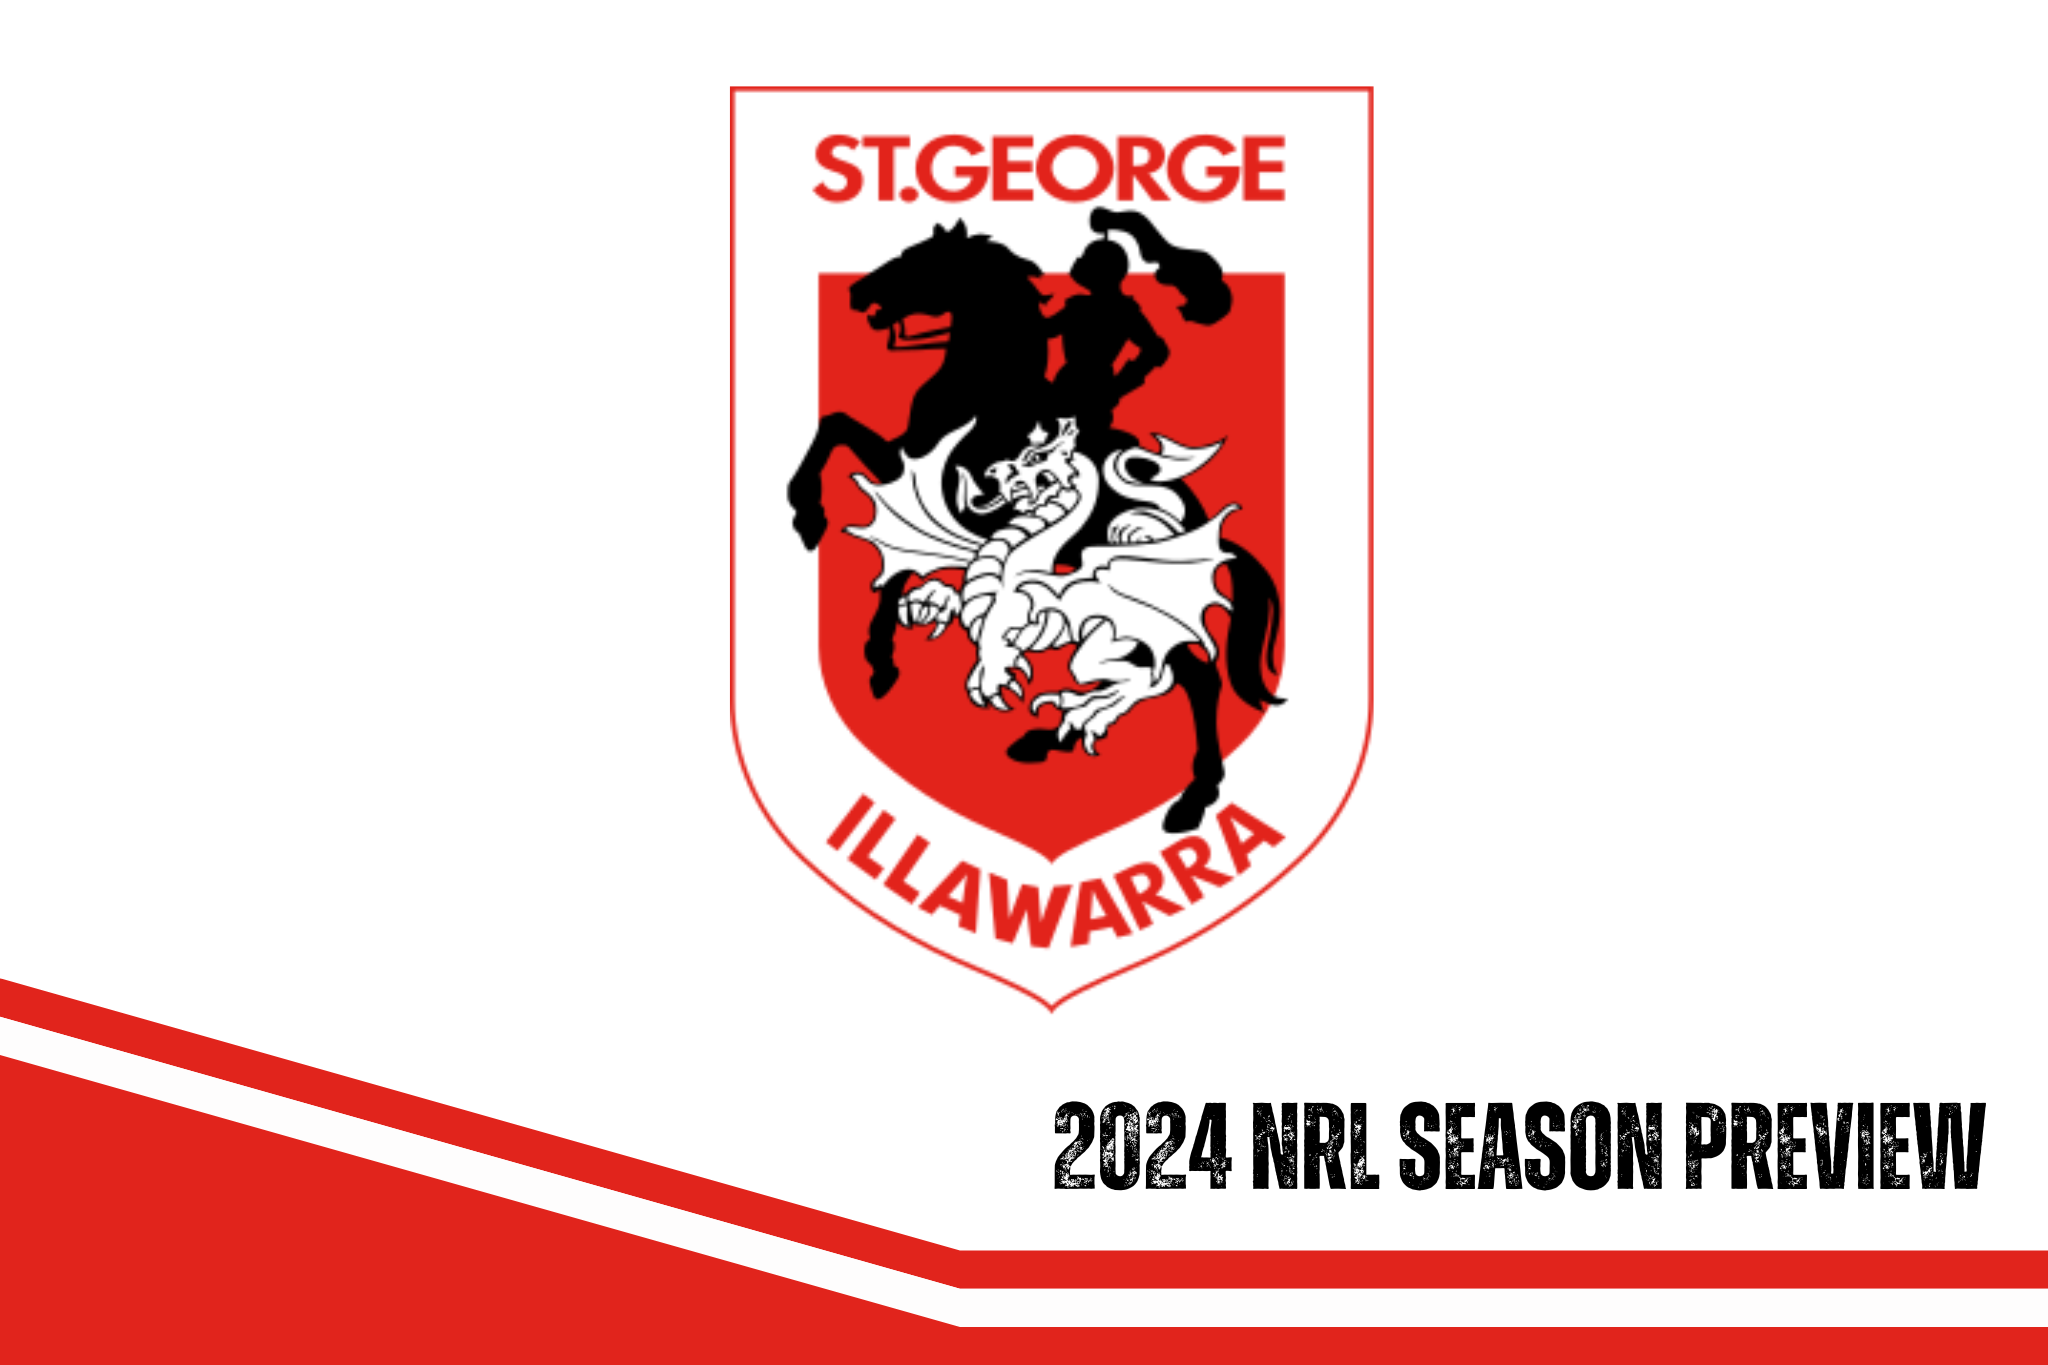 St. George Illawarra Dragons 2024 season preview